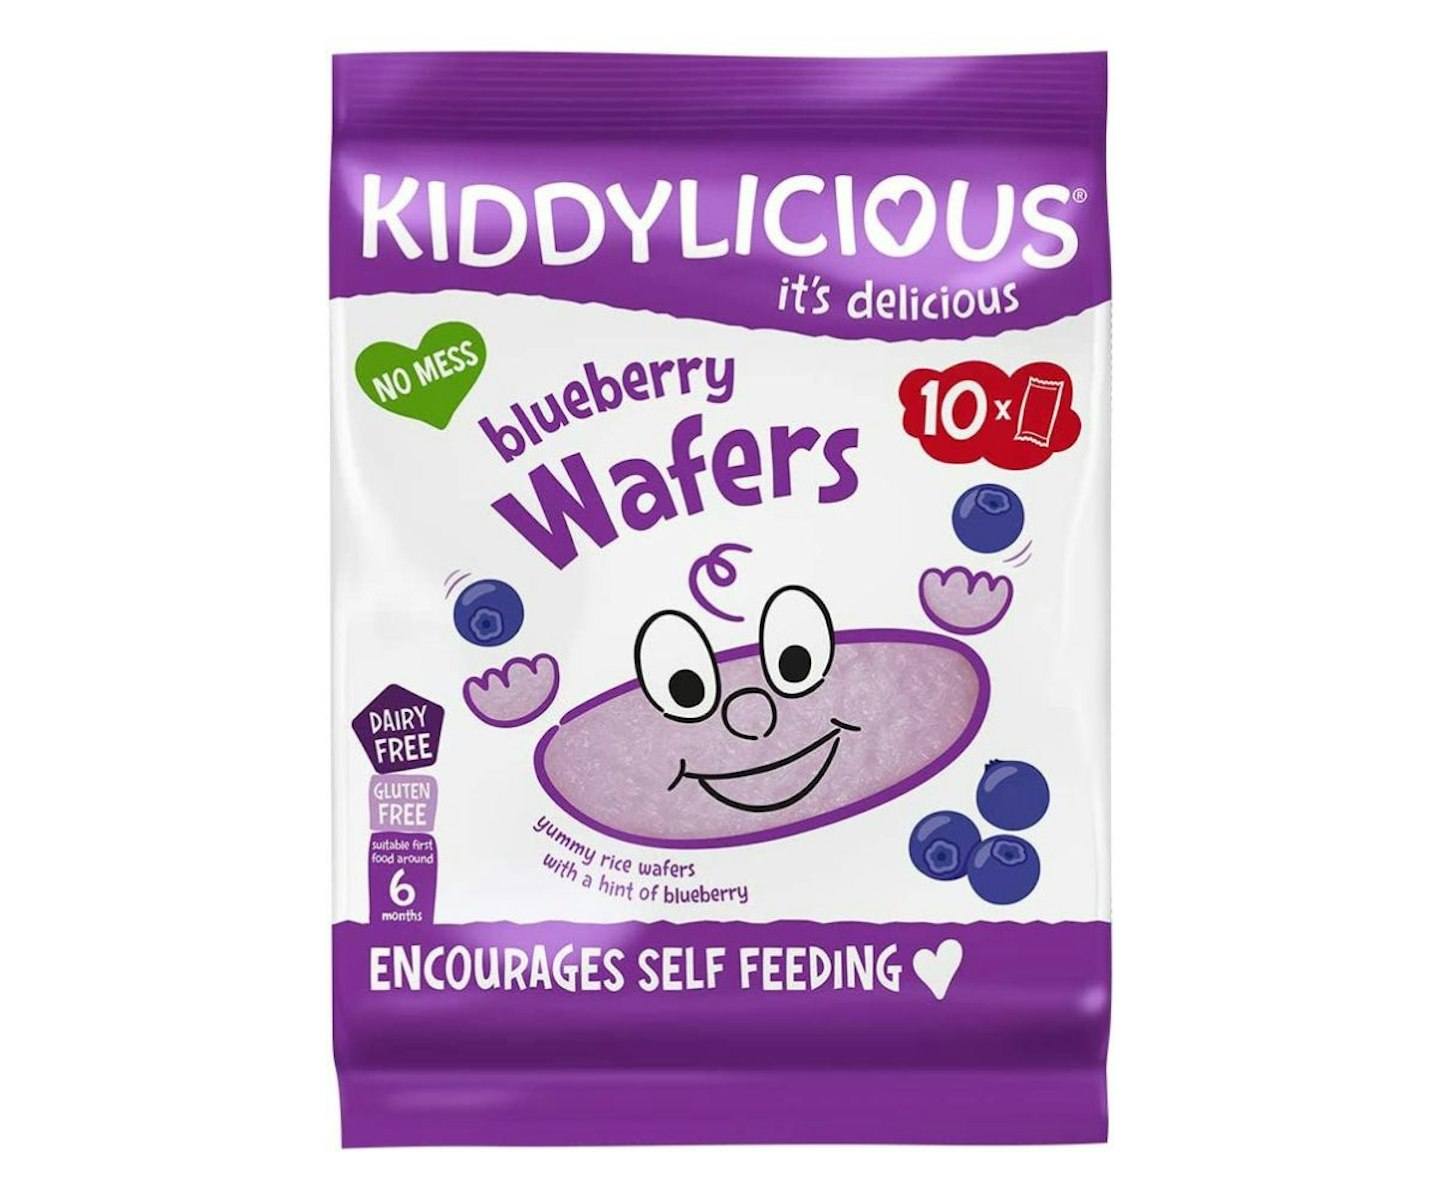 Kiddylicious Wafers